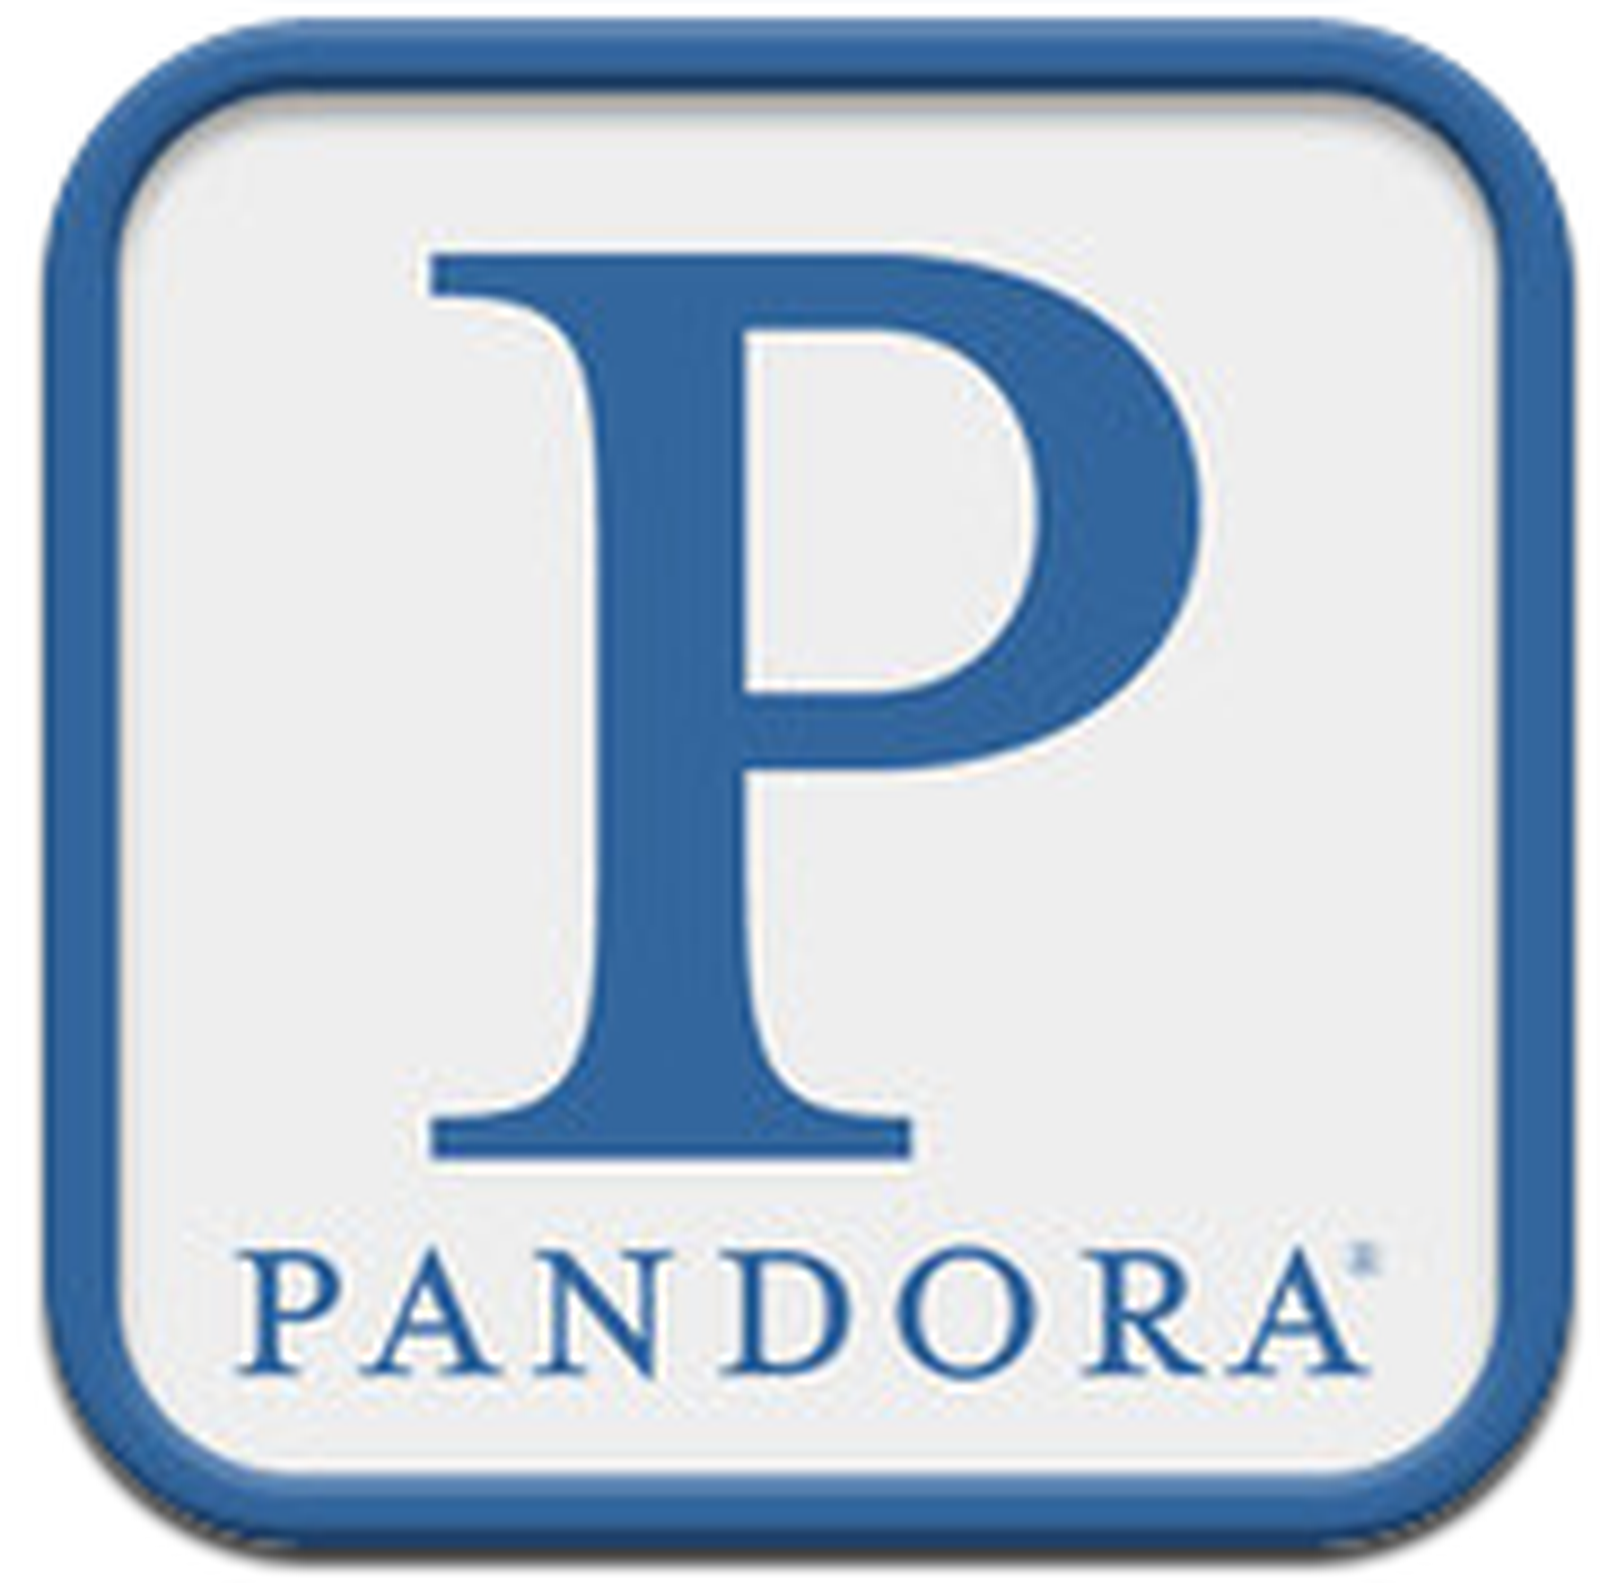 Pandora Updates iOS App with Auto-Mute, Buffering Poor Connections - MacRumors